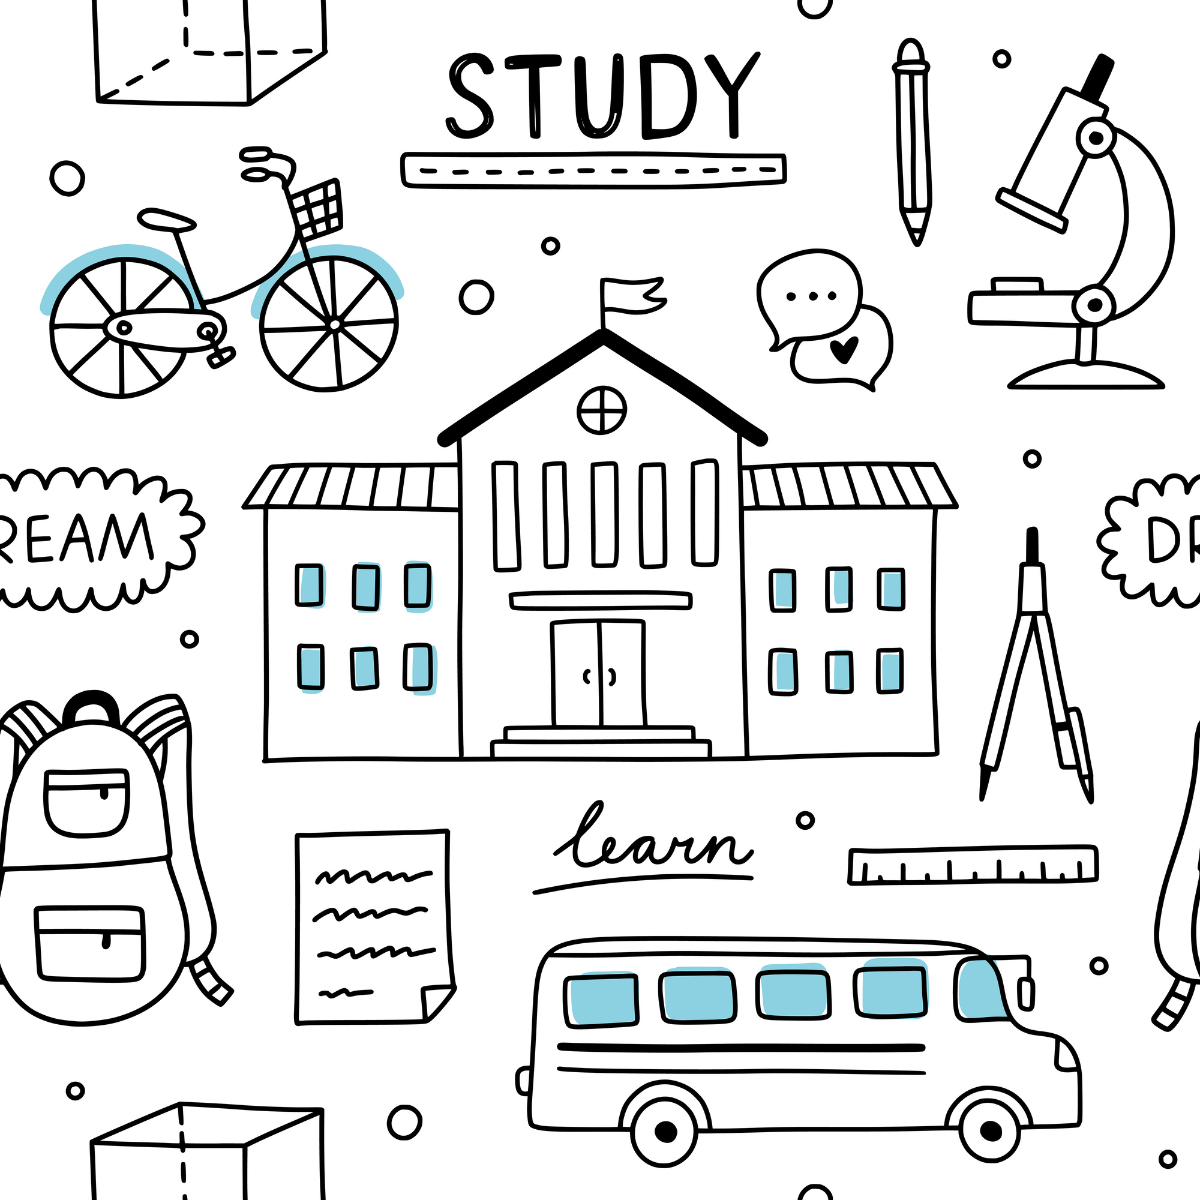 Drawings related to school, school bus, notebook, ruler, etc.